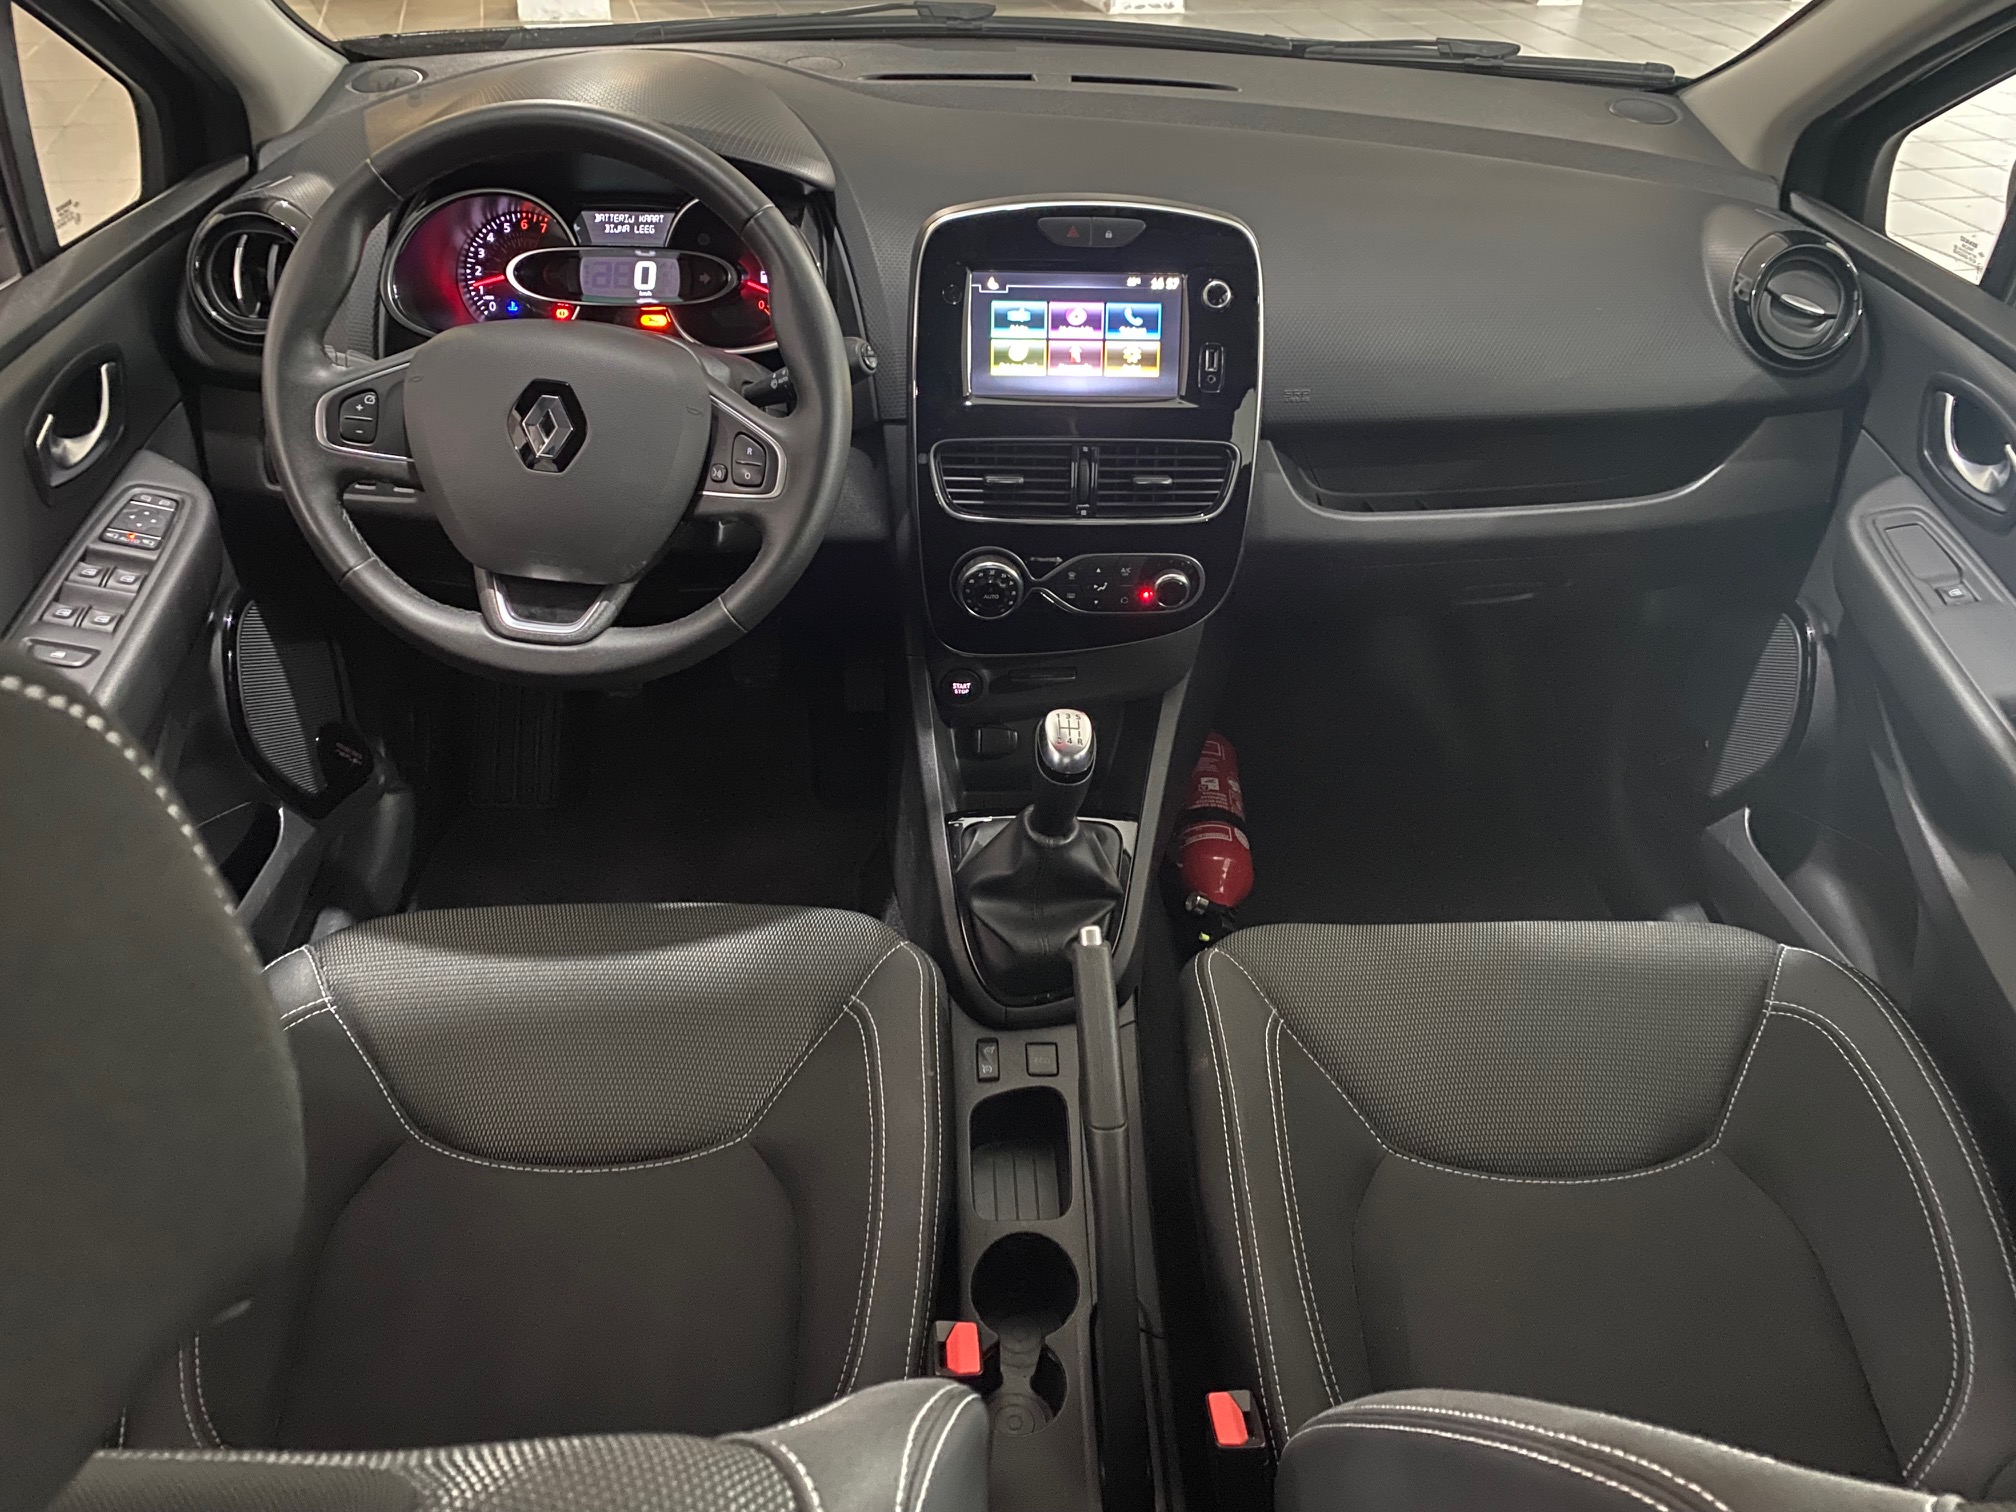 RENAULT CLIO 0.9 Tce Gasolina  – 90 cv – Abril 2019